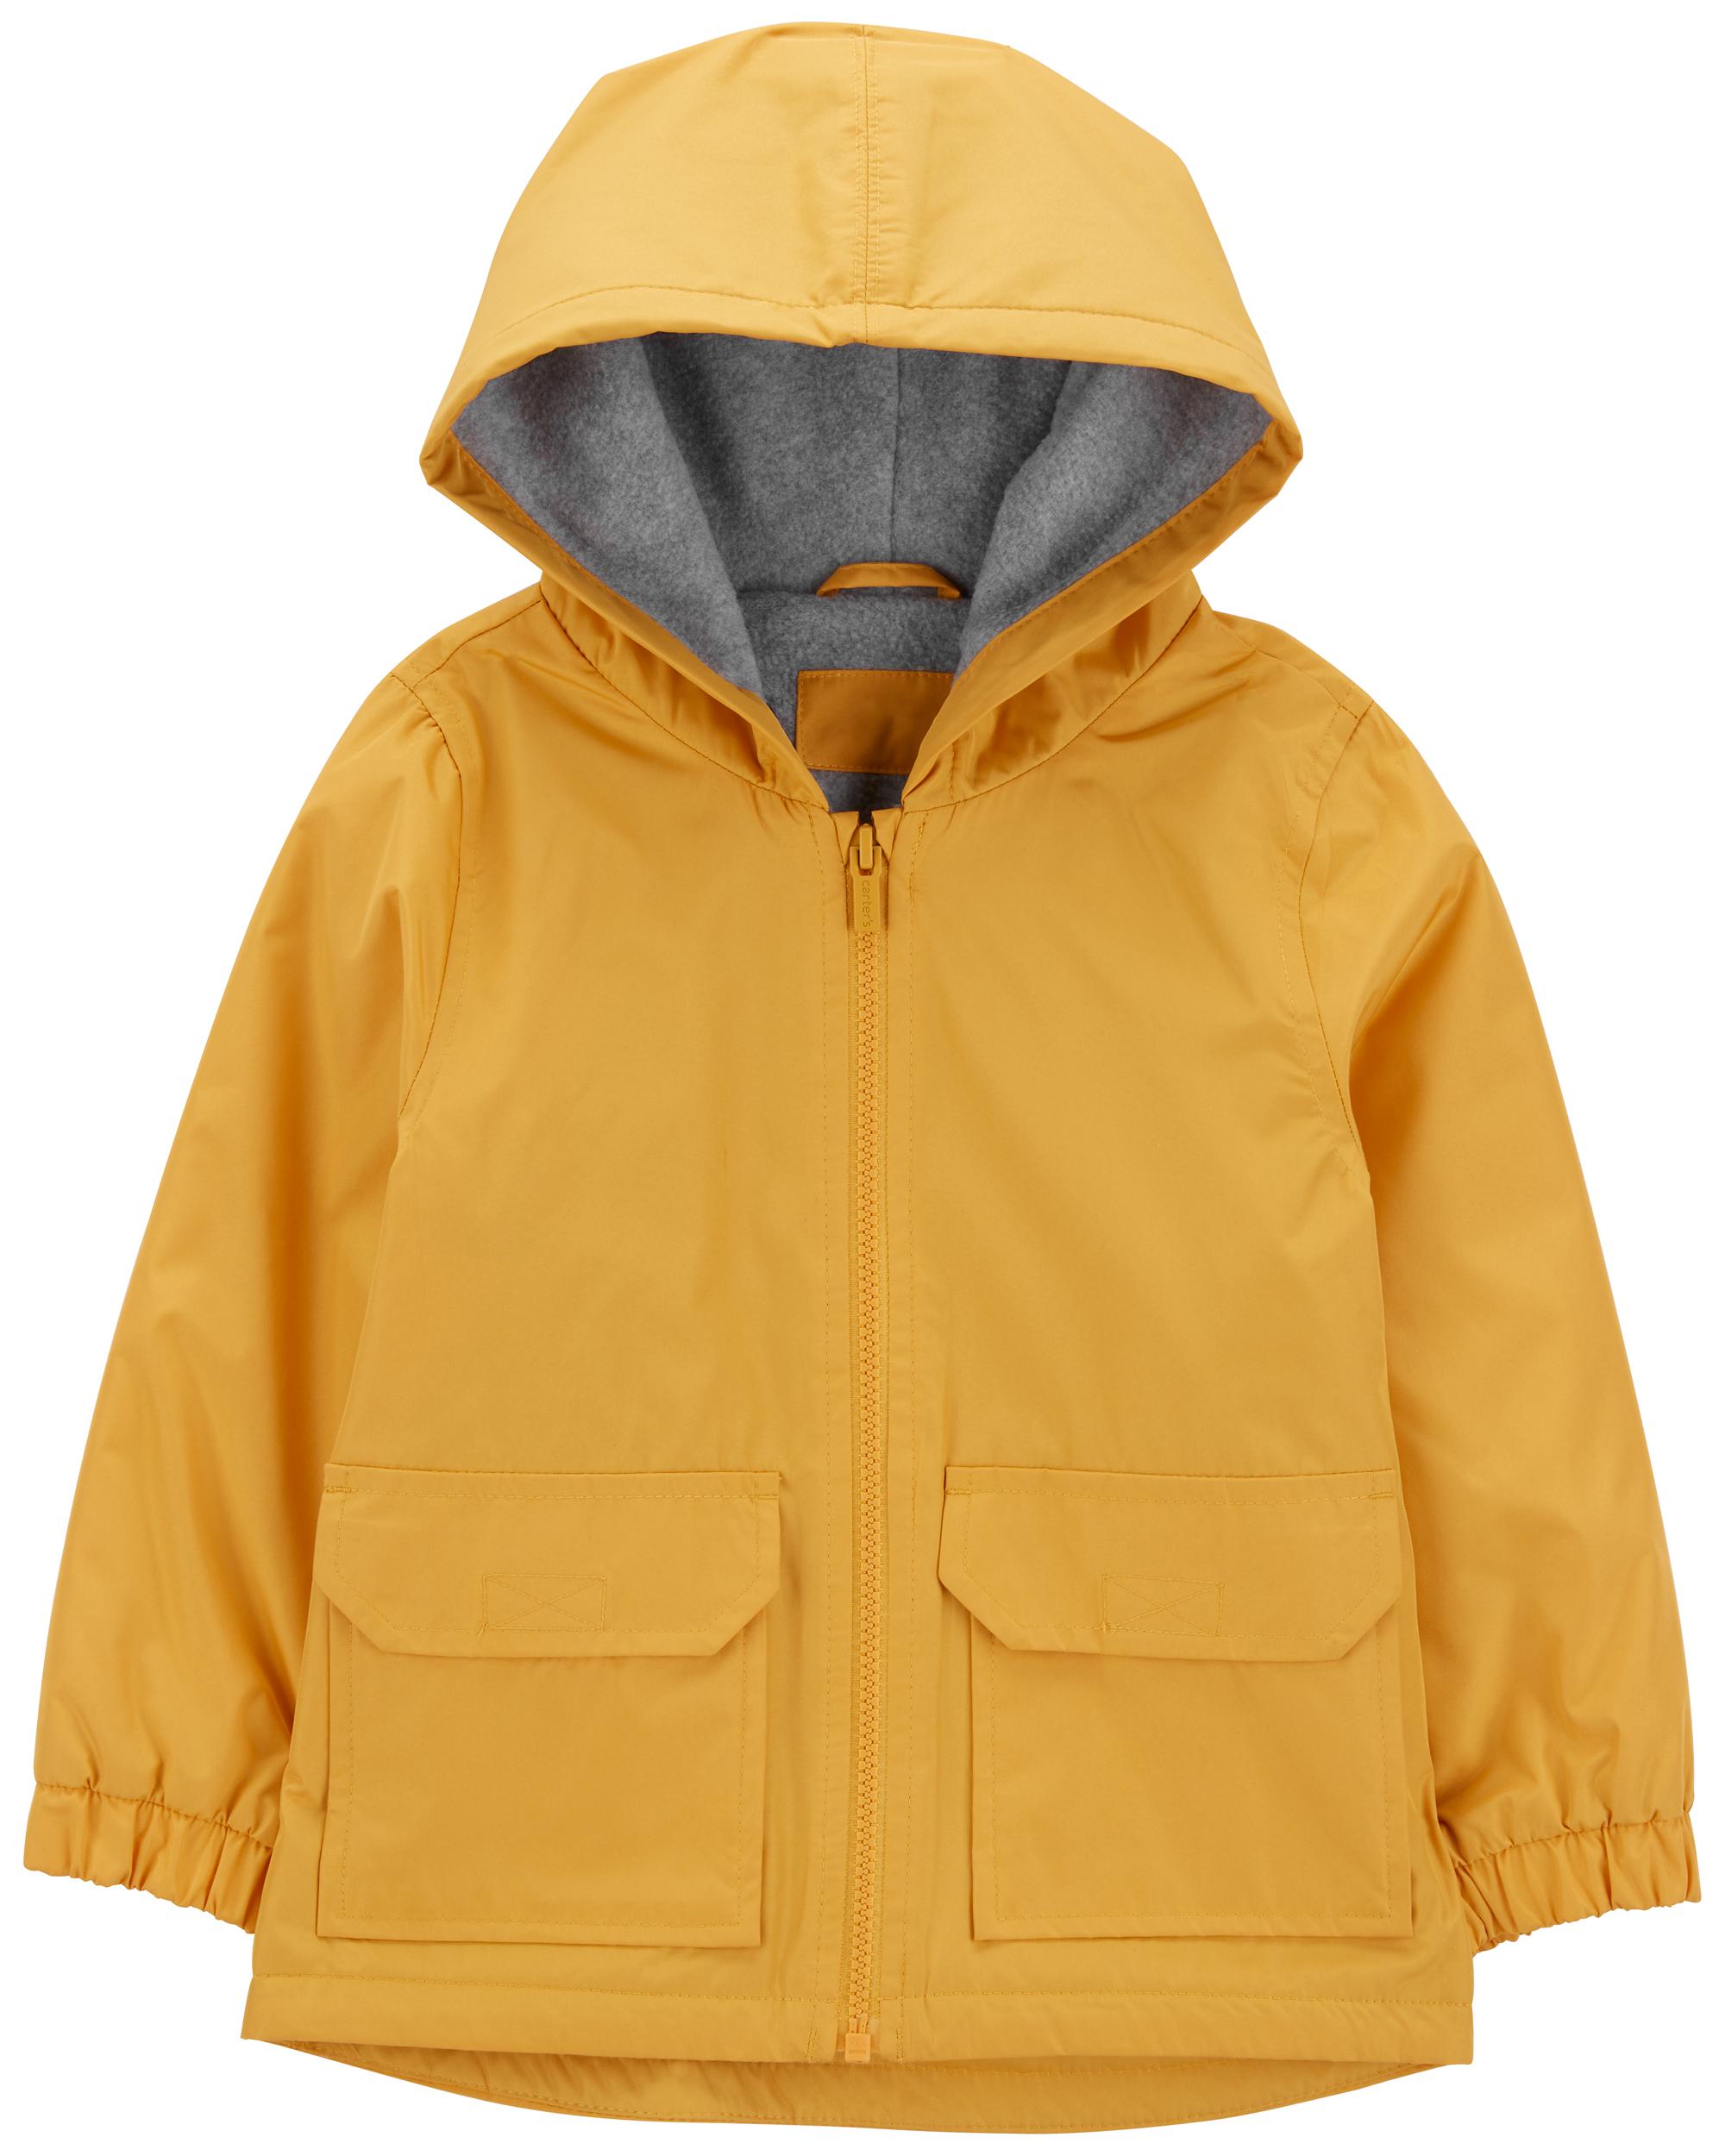 Toddler Fleece-Lined Rain Jacket